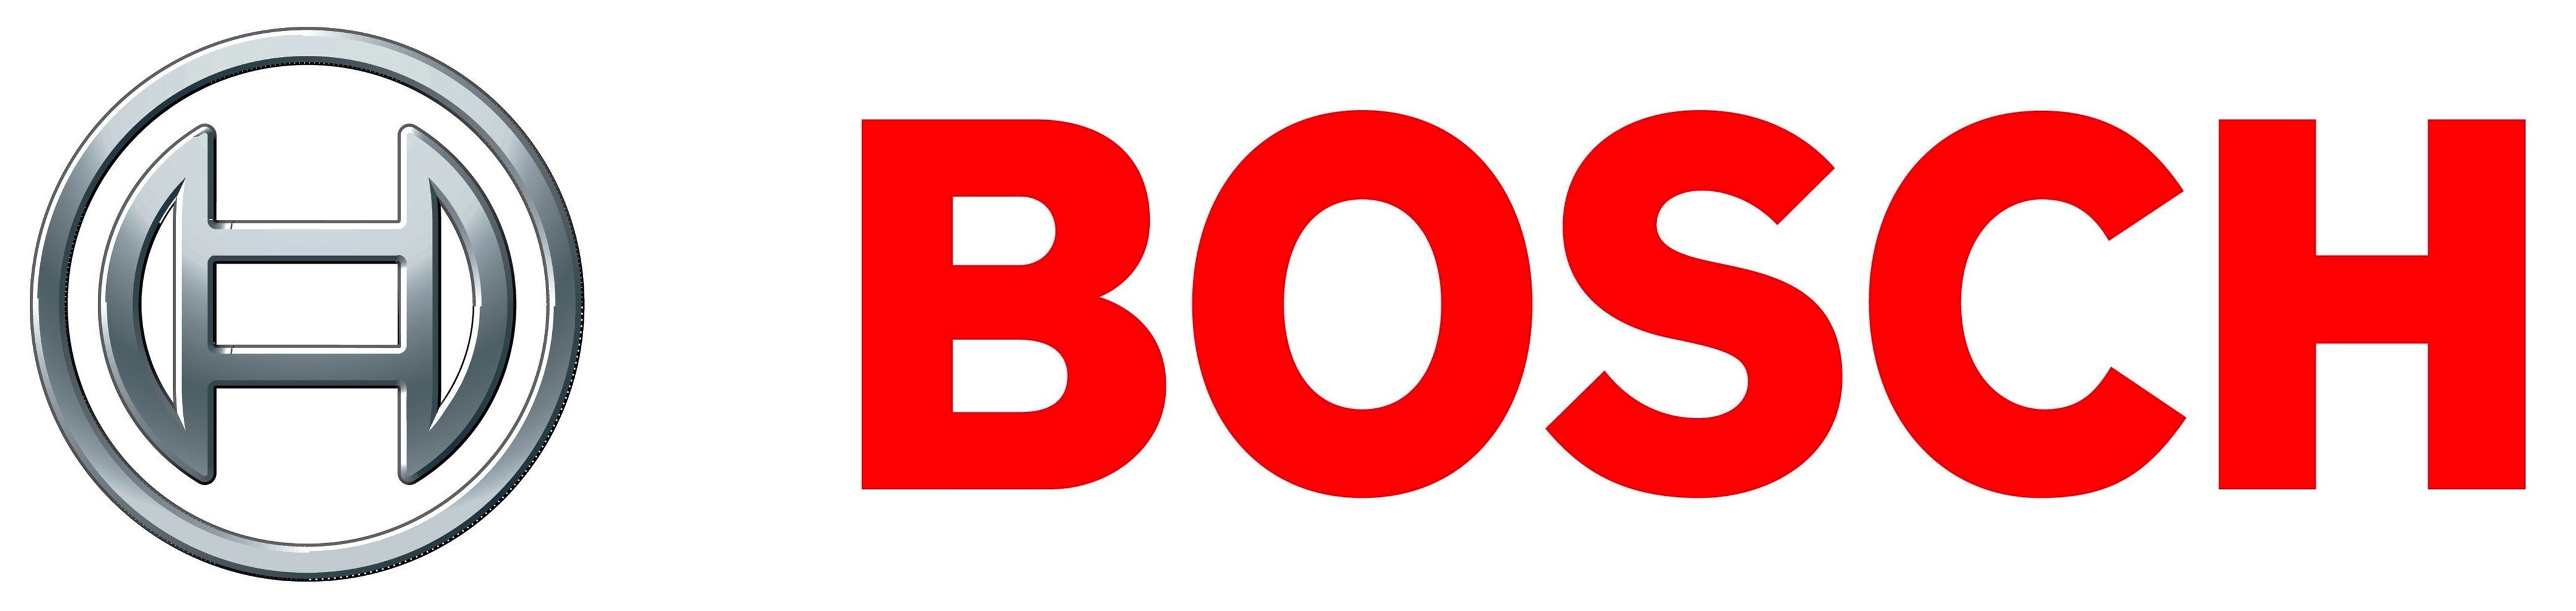 Bosch Logo photo - 1